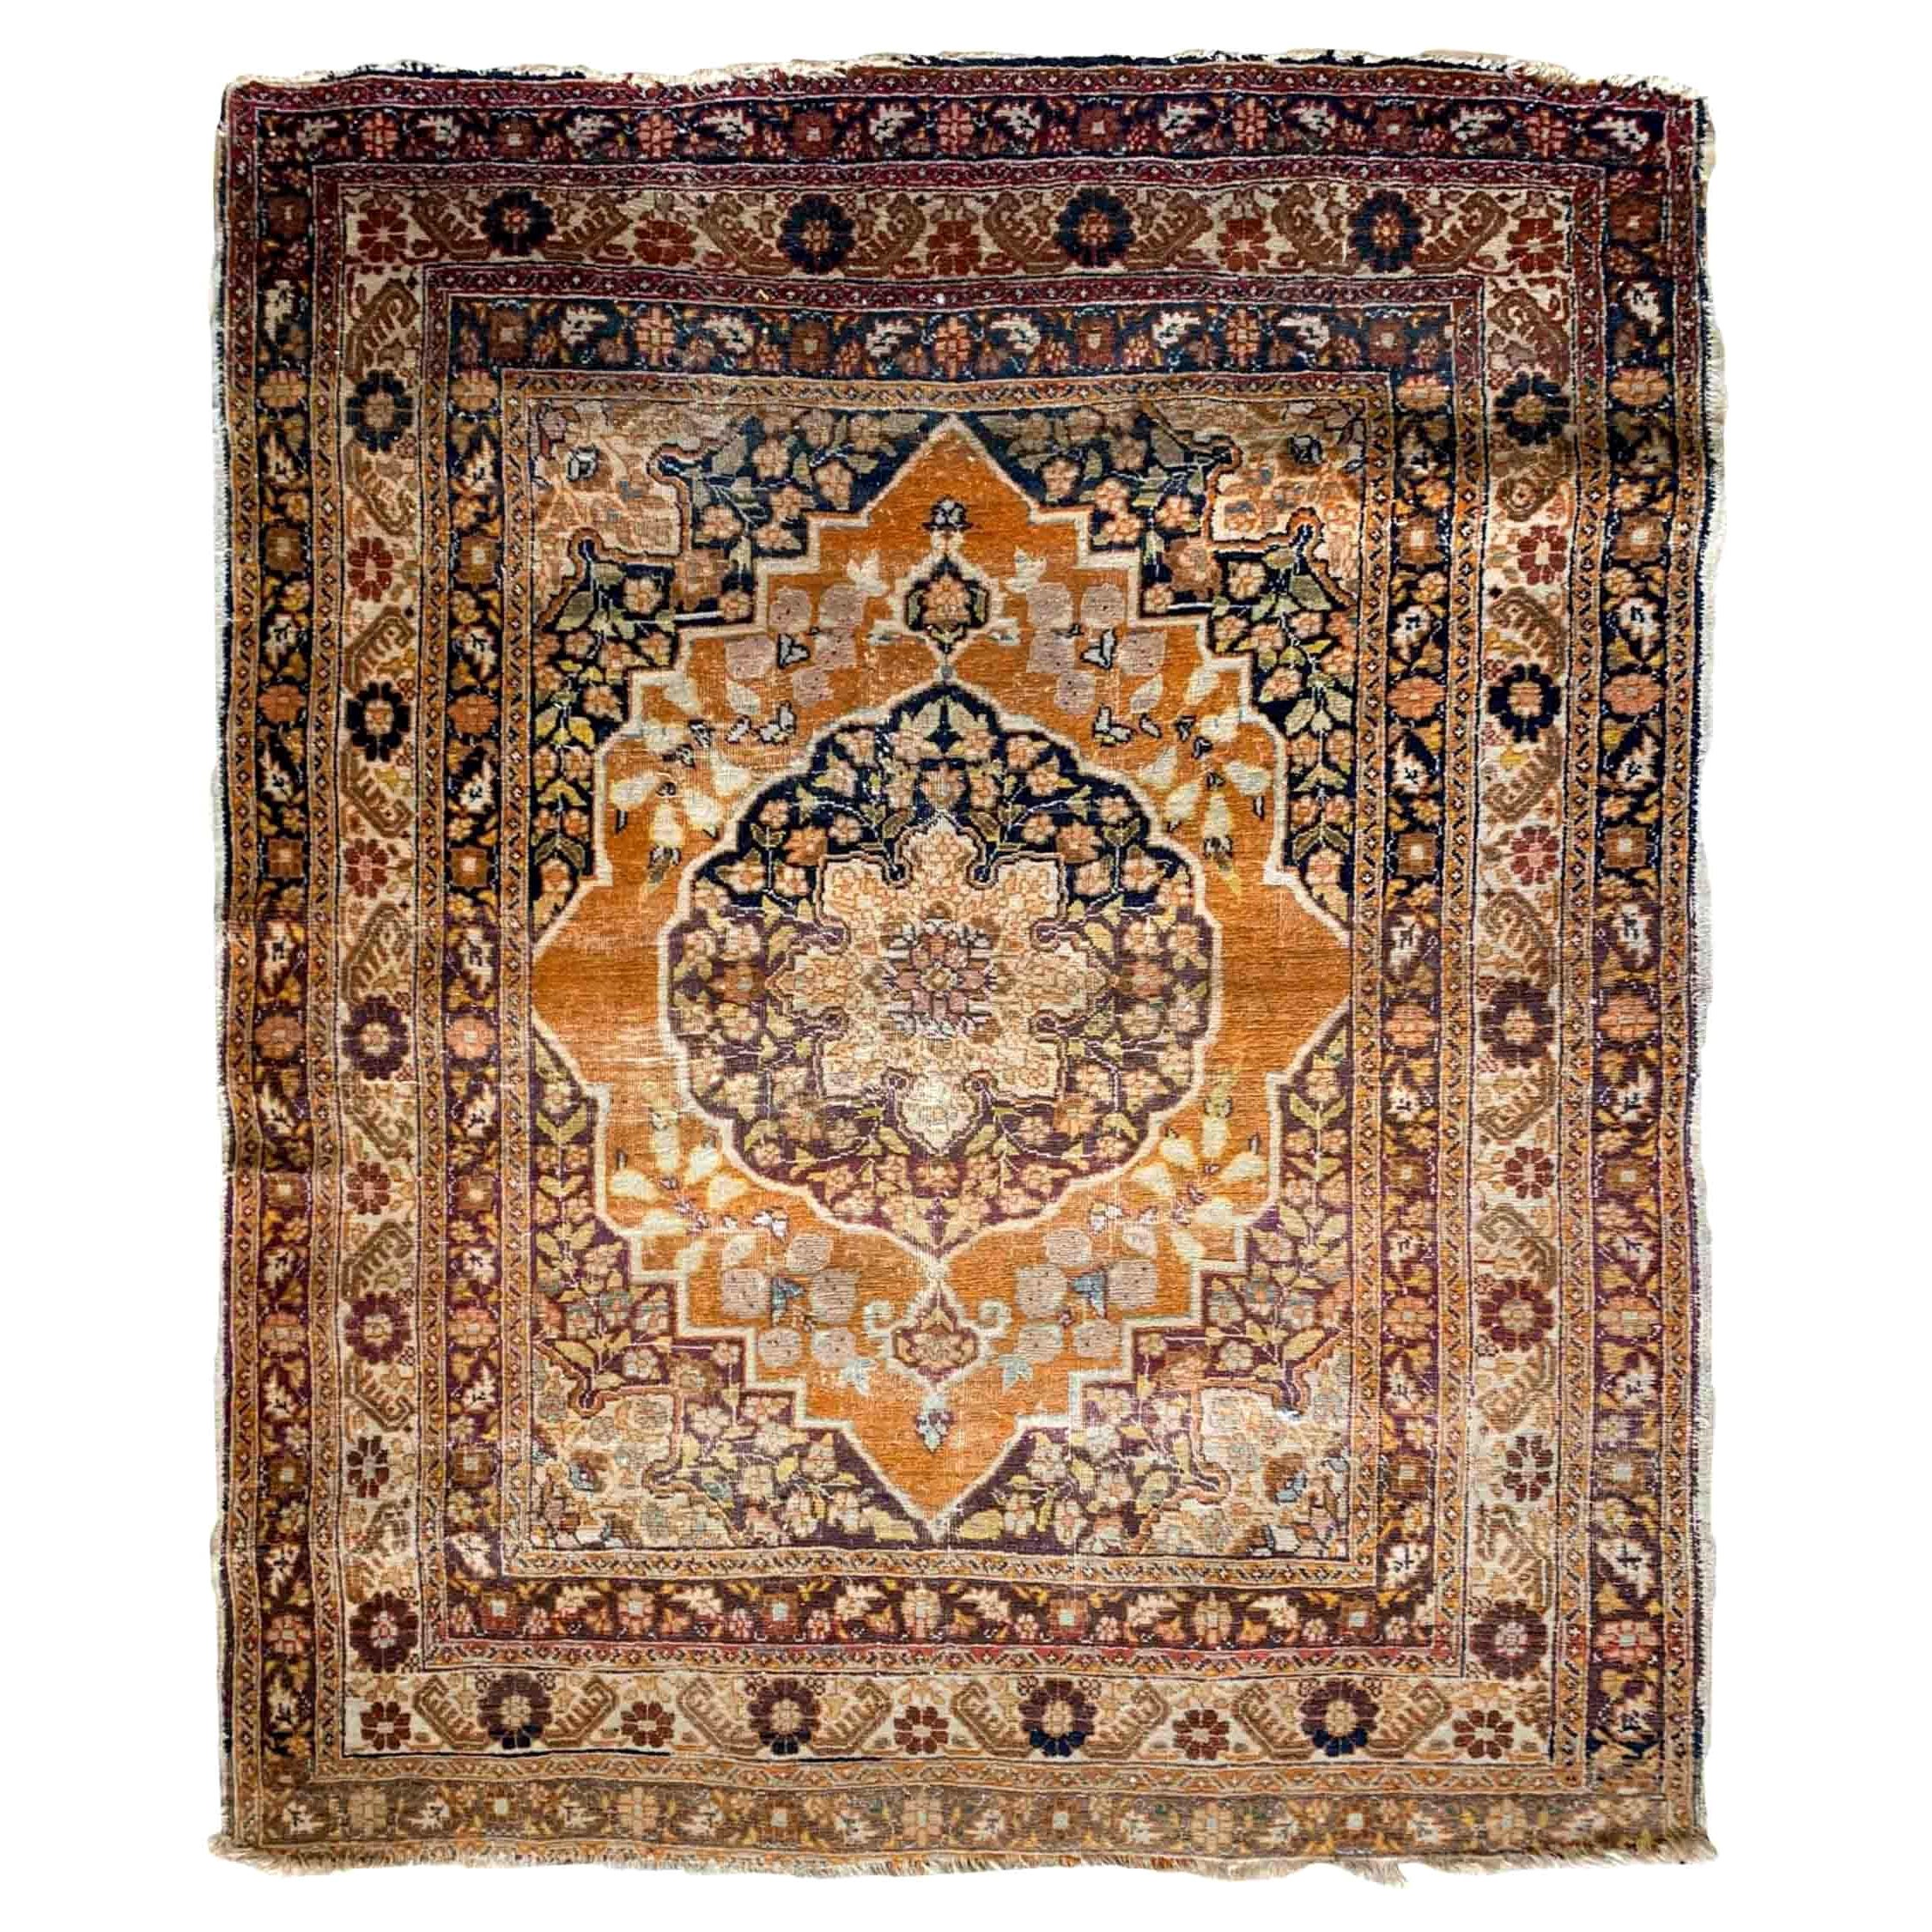 Handmade Antique Tabriz Hajalili Style Rug, 1880s, 1B880